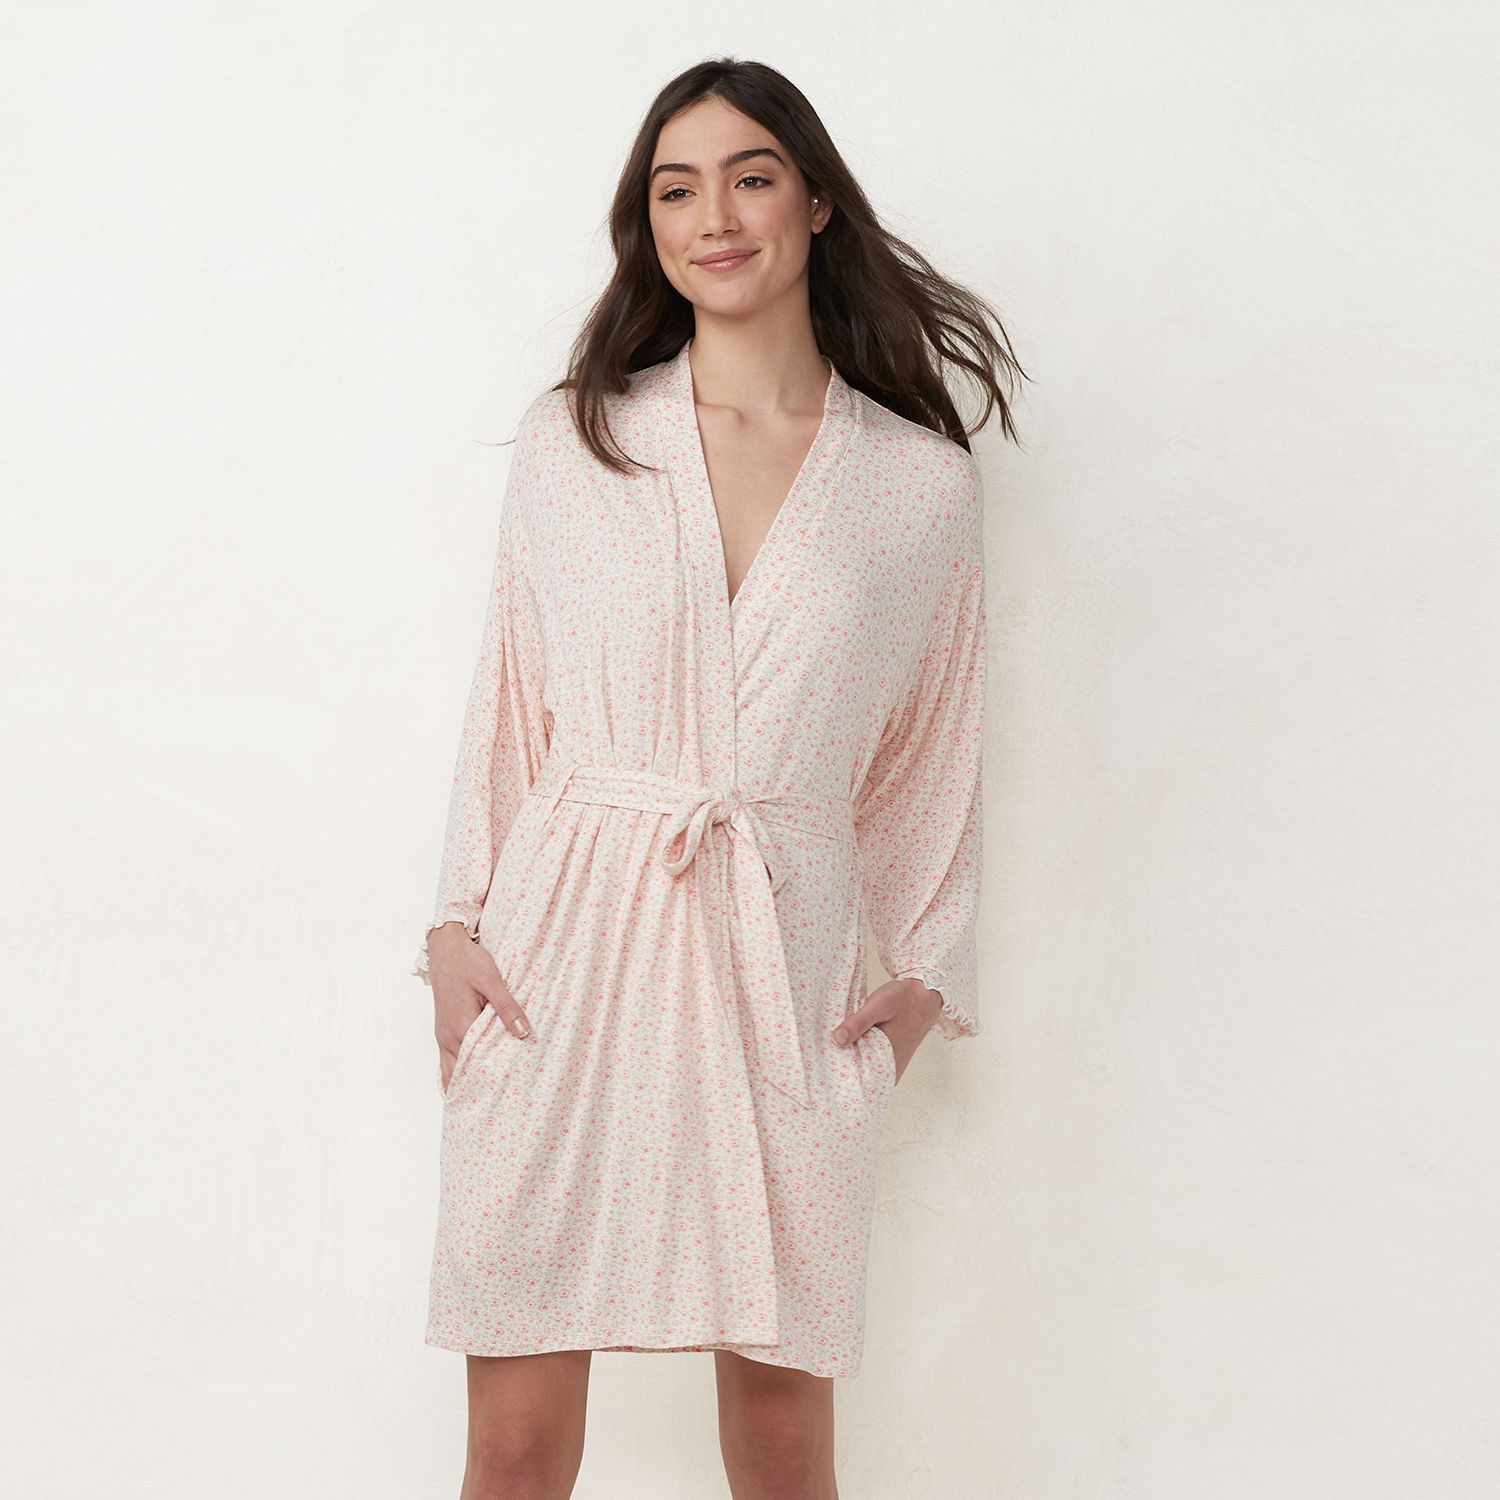 Image for LC Lauren Conrad Women's Wrap Robe at Kohl's.